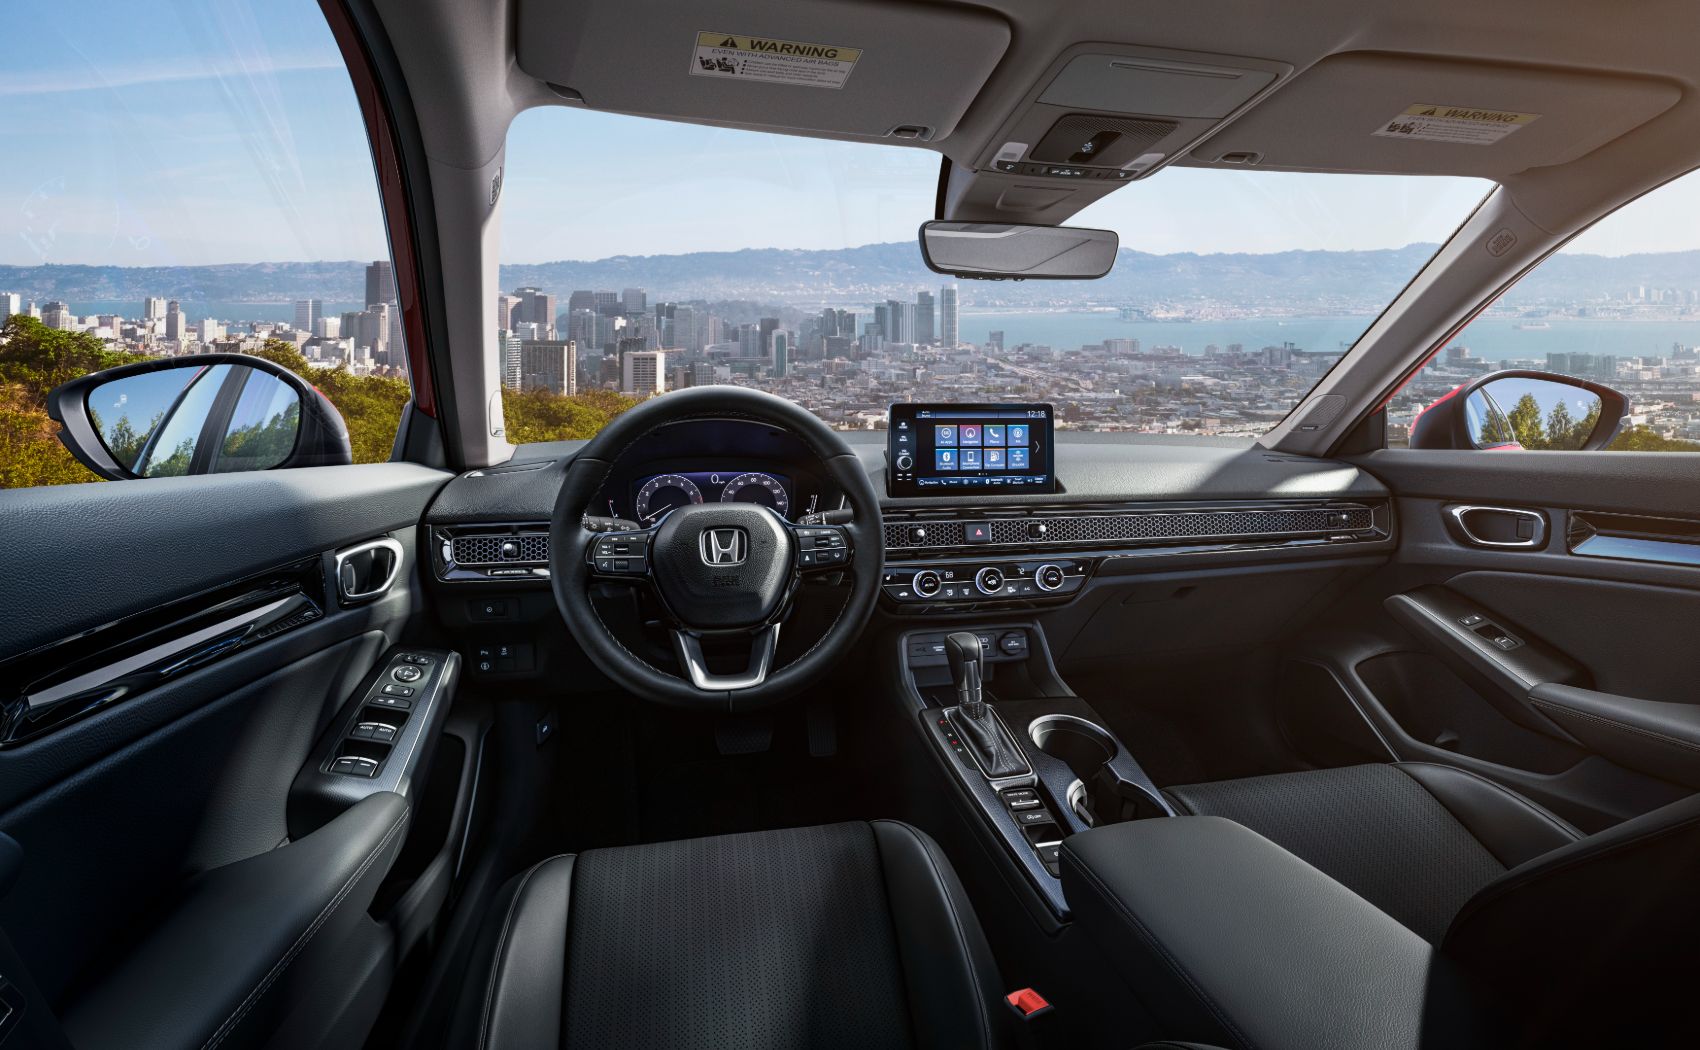 2022 Honda Civic Sedan Is Here, So Let’s Take a Closer Look at Its